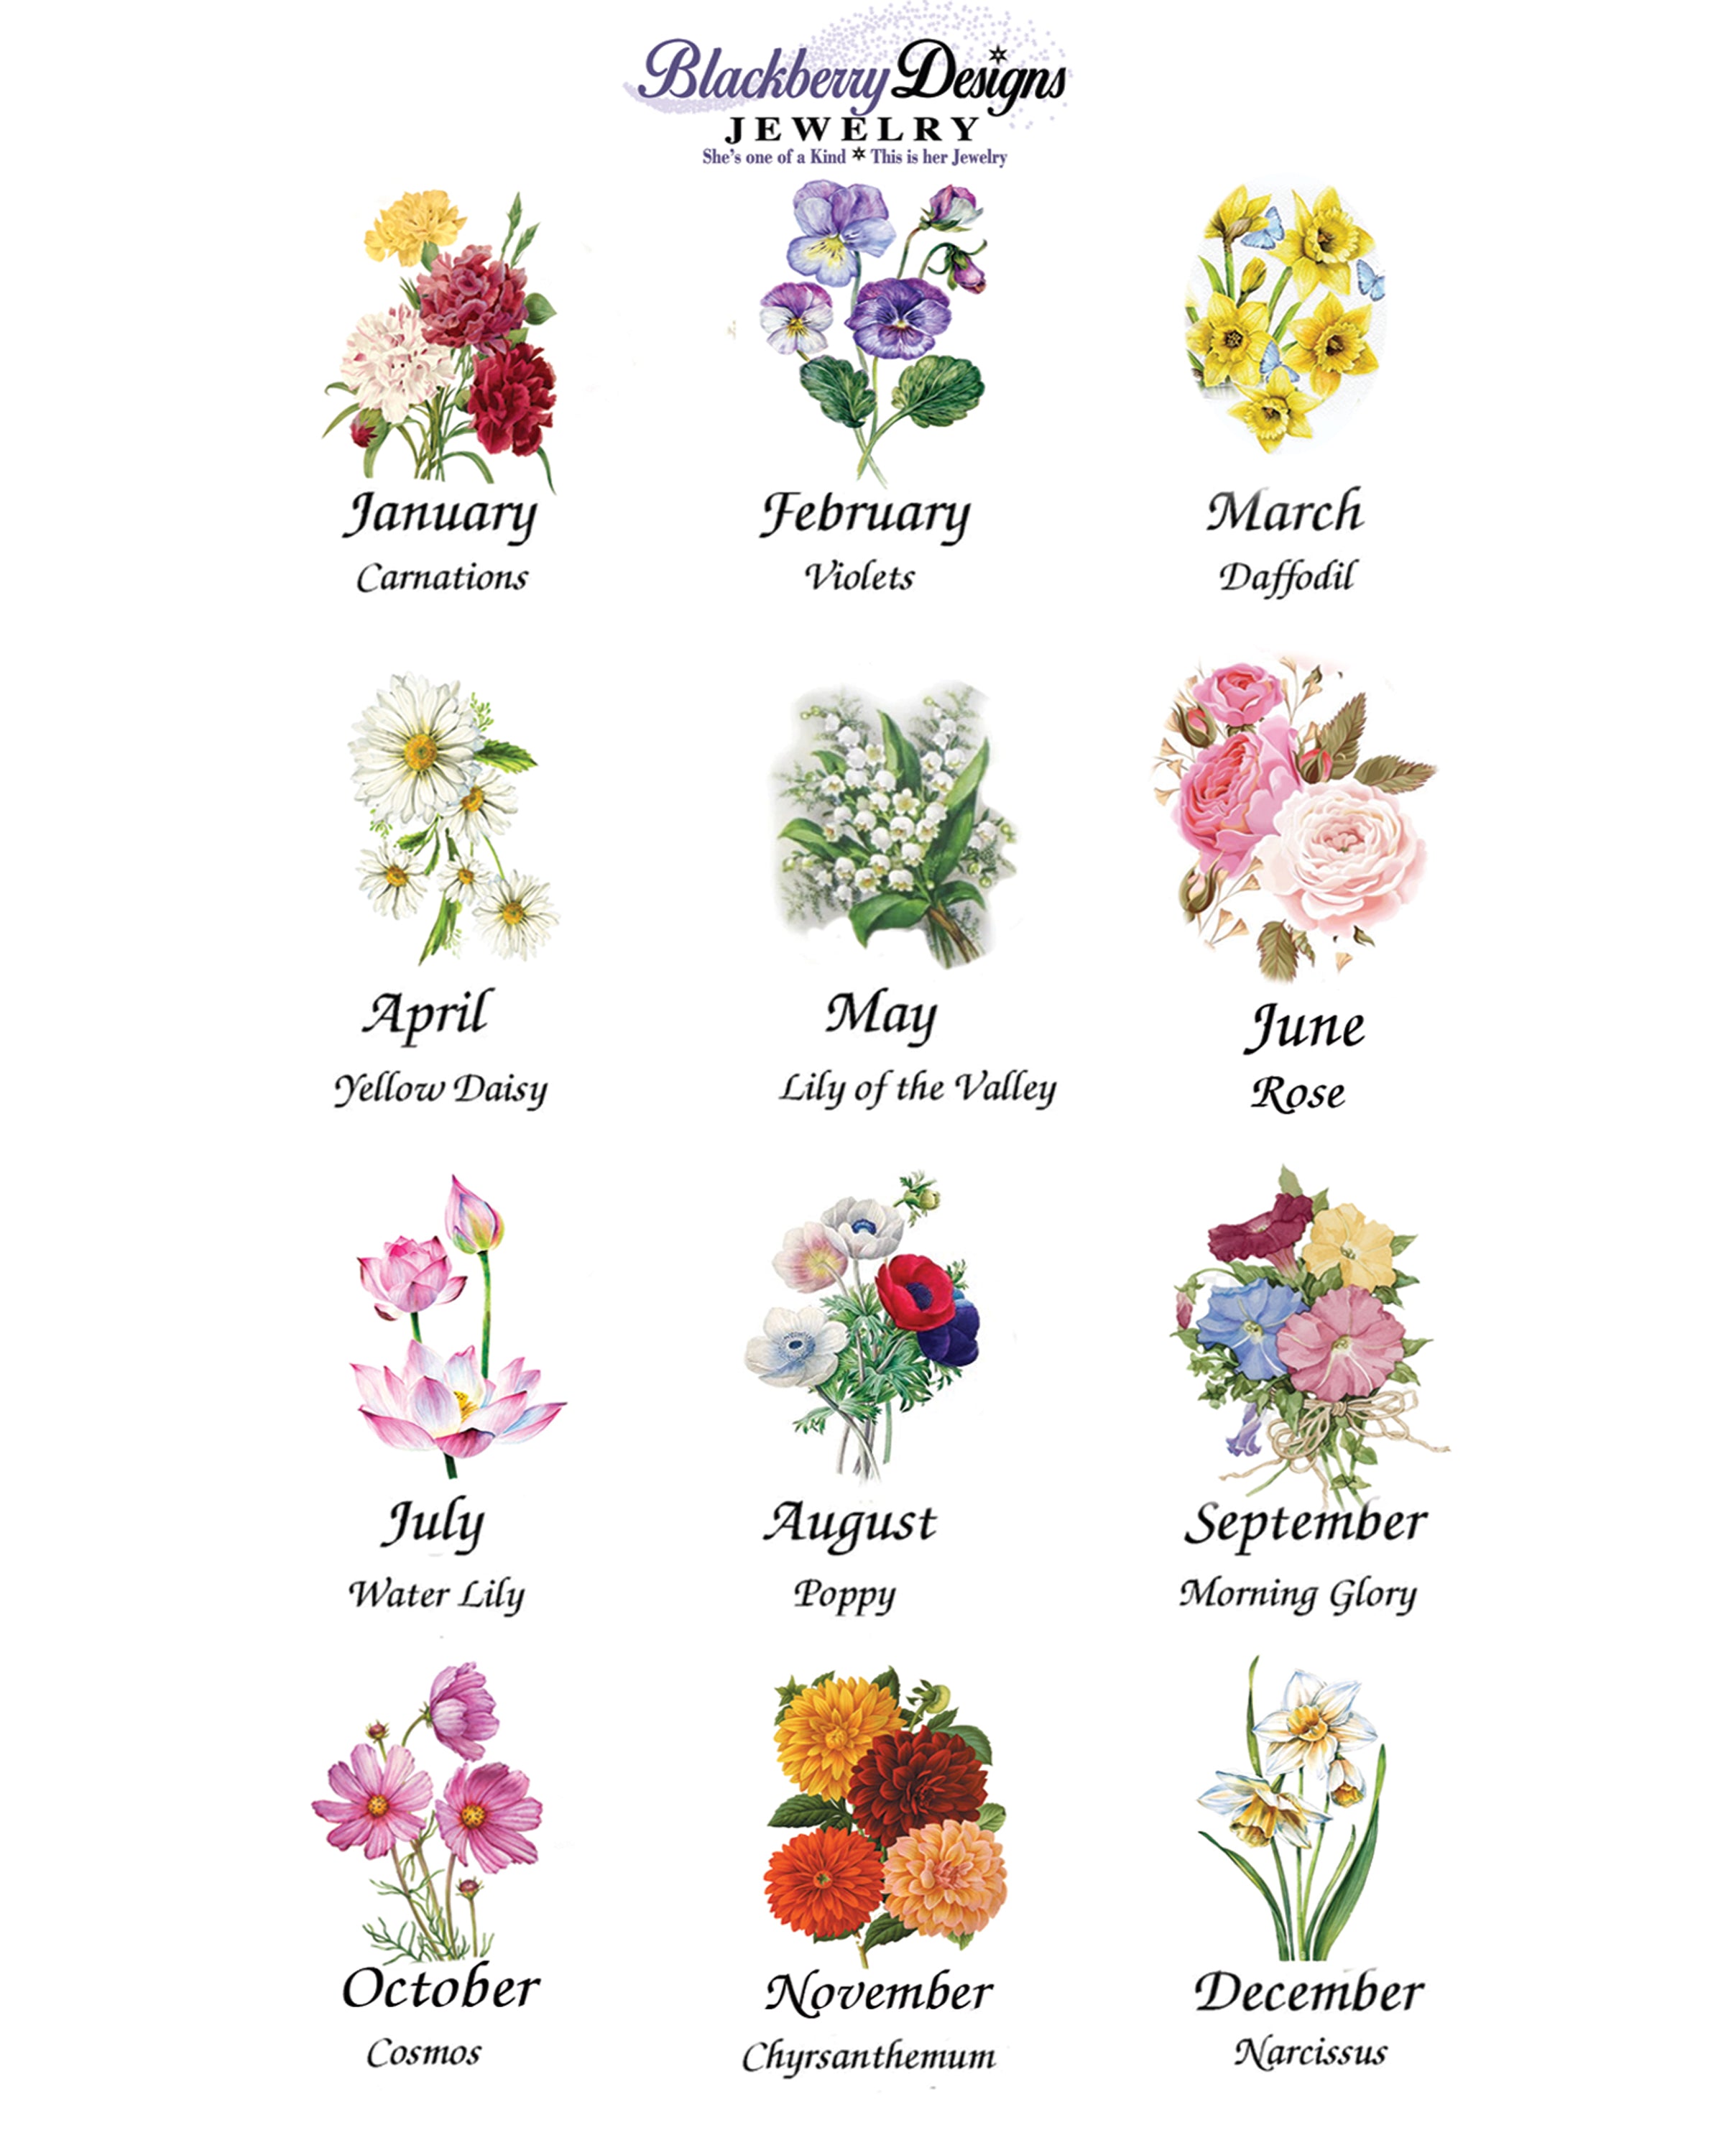 may birth flowers